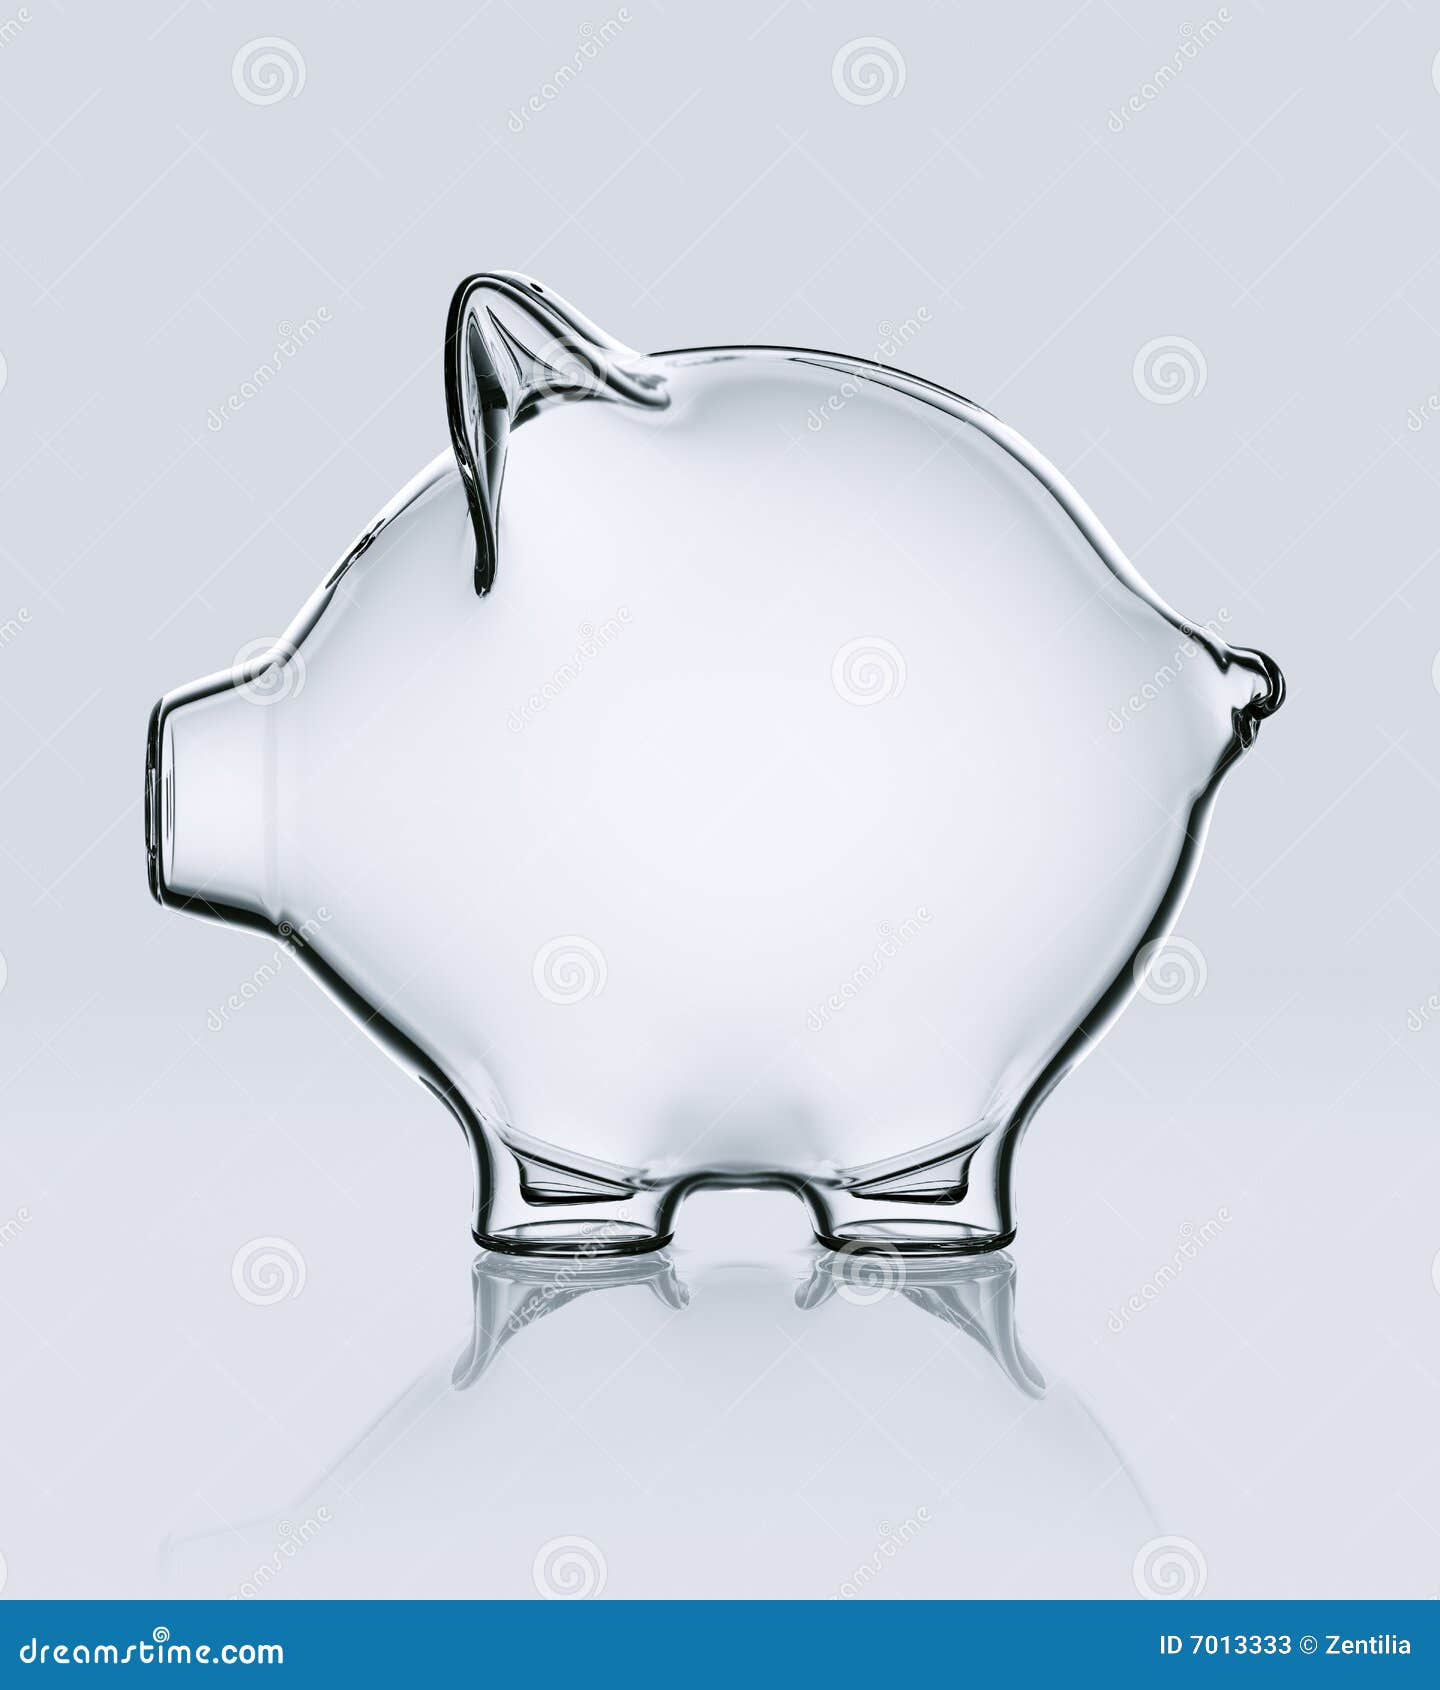 piggy bank in glass